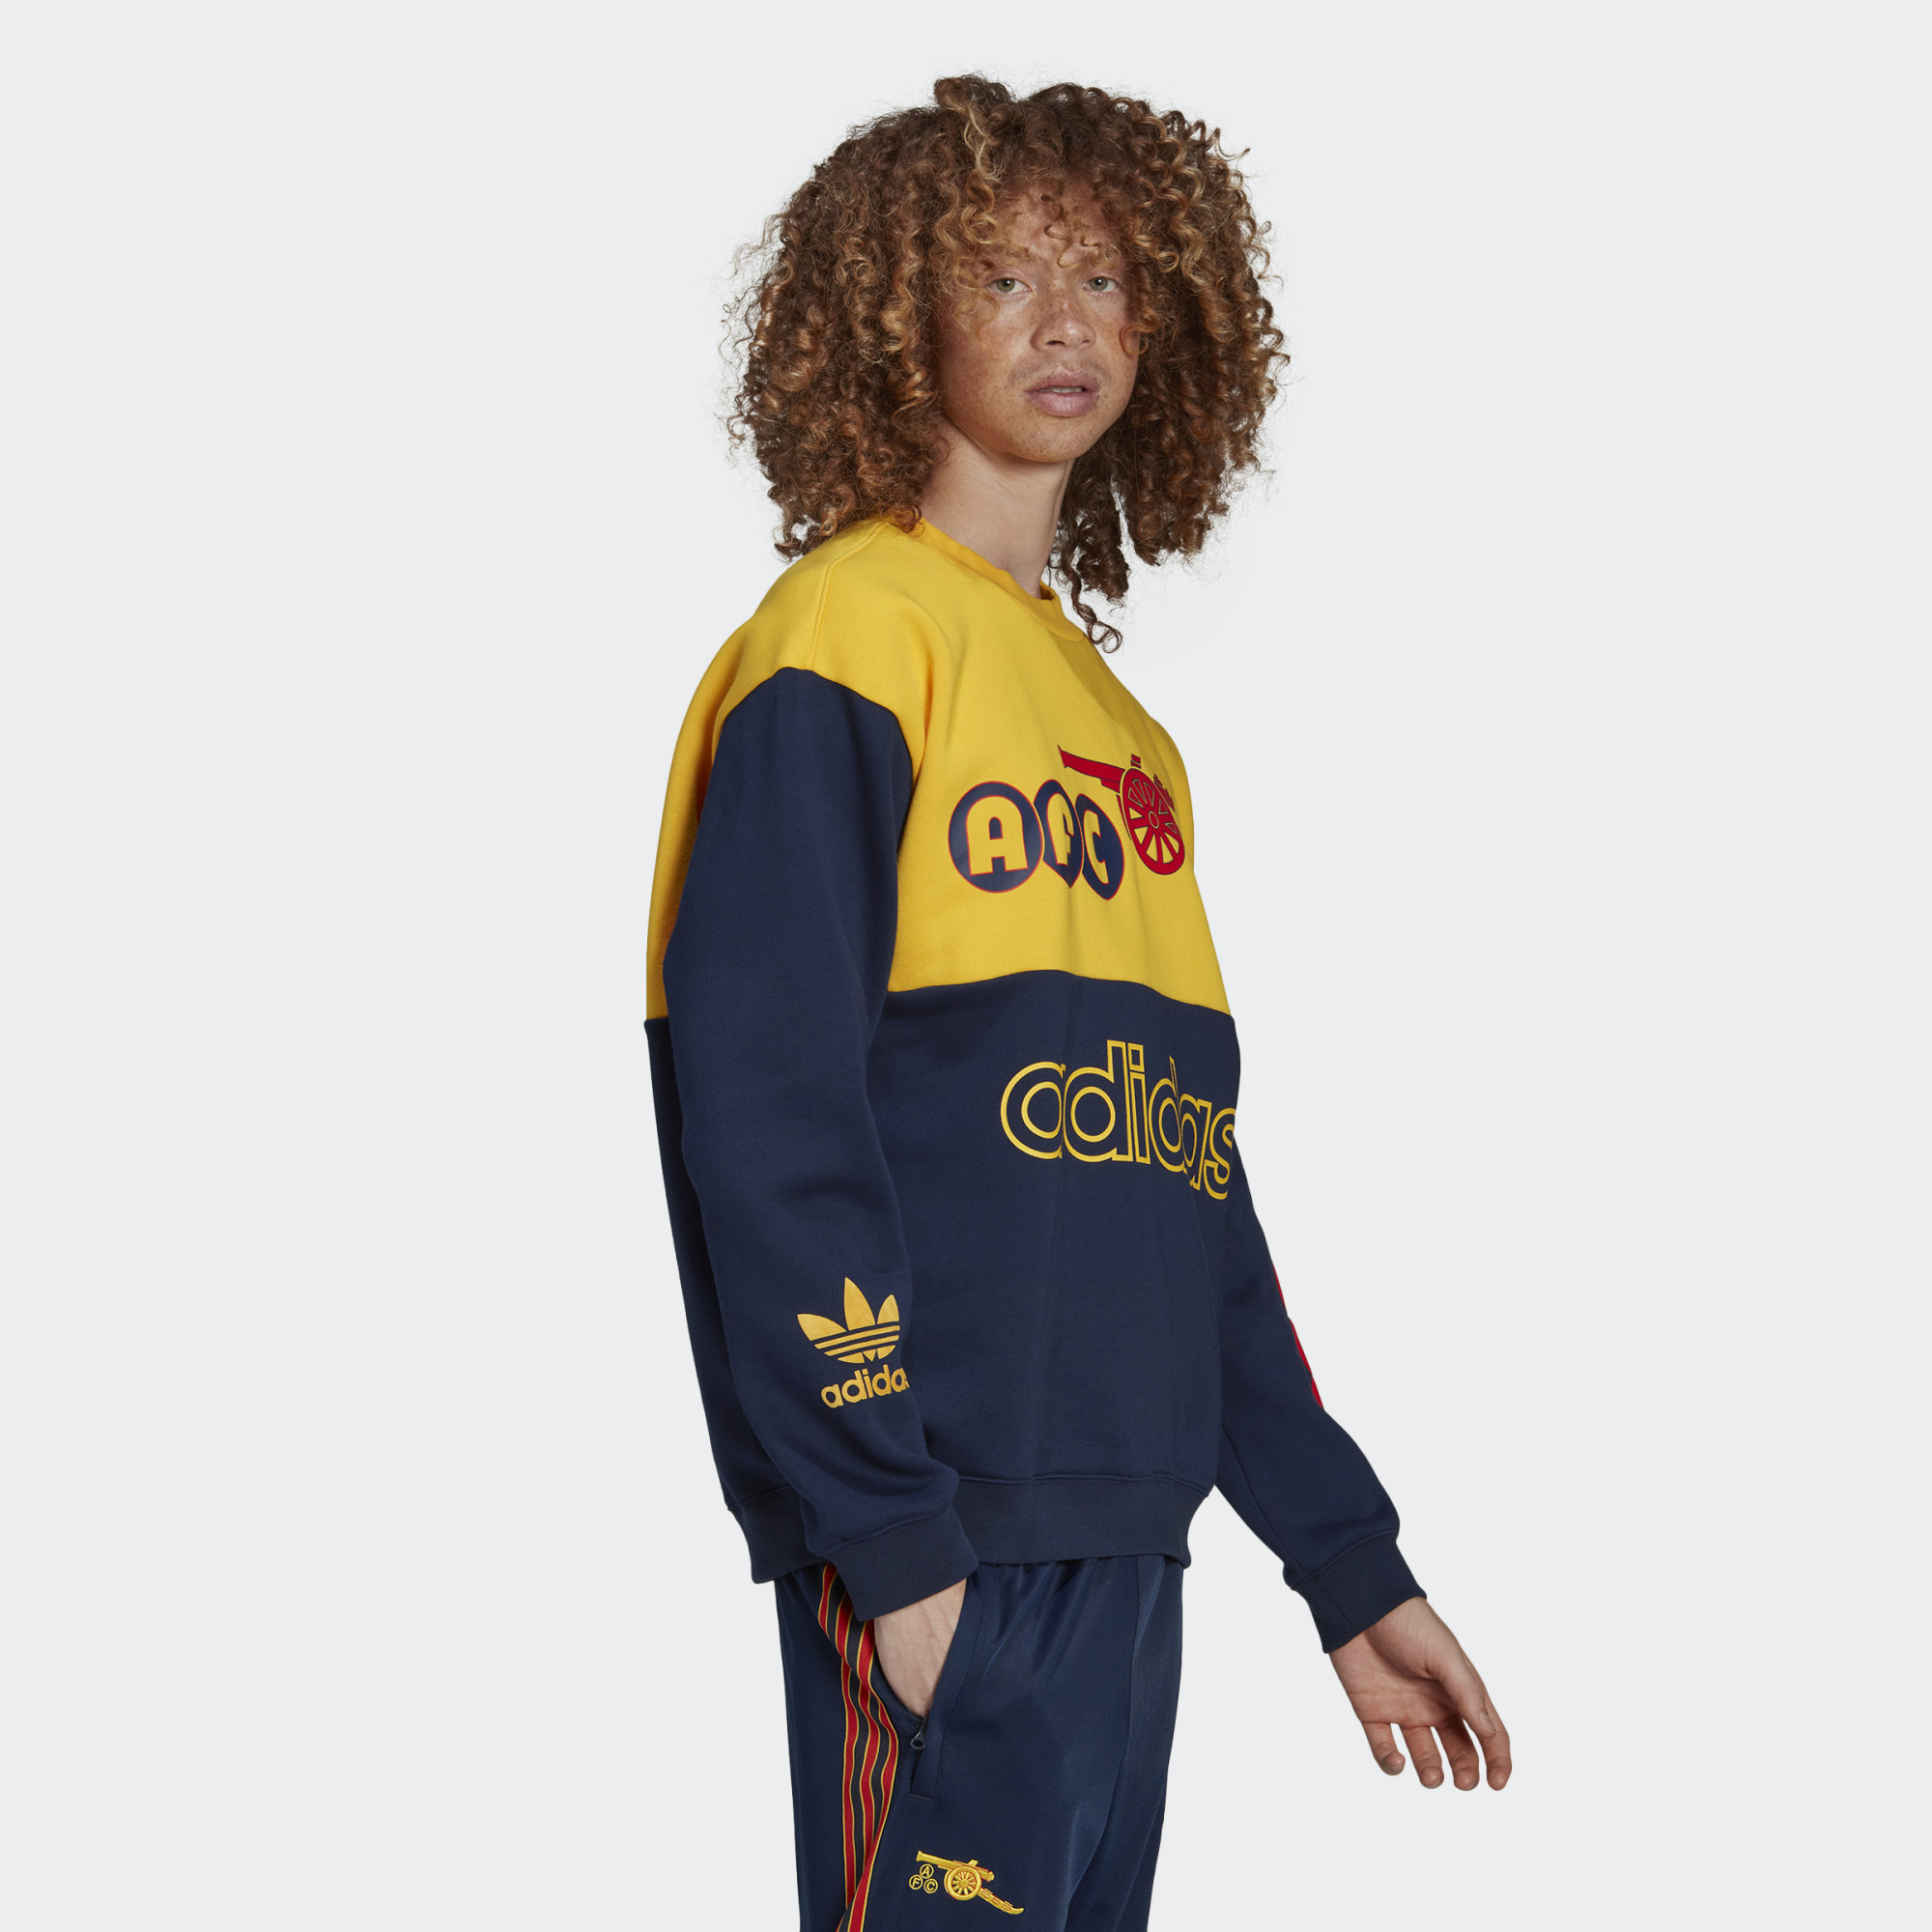 Arsenal X Adidas Retro Graphic Crew Sweatshirt Football Shirt Culture Latest Football Kit and More